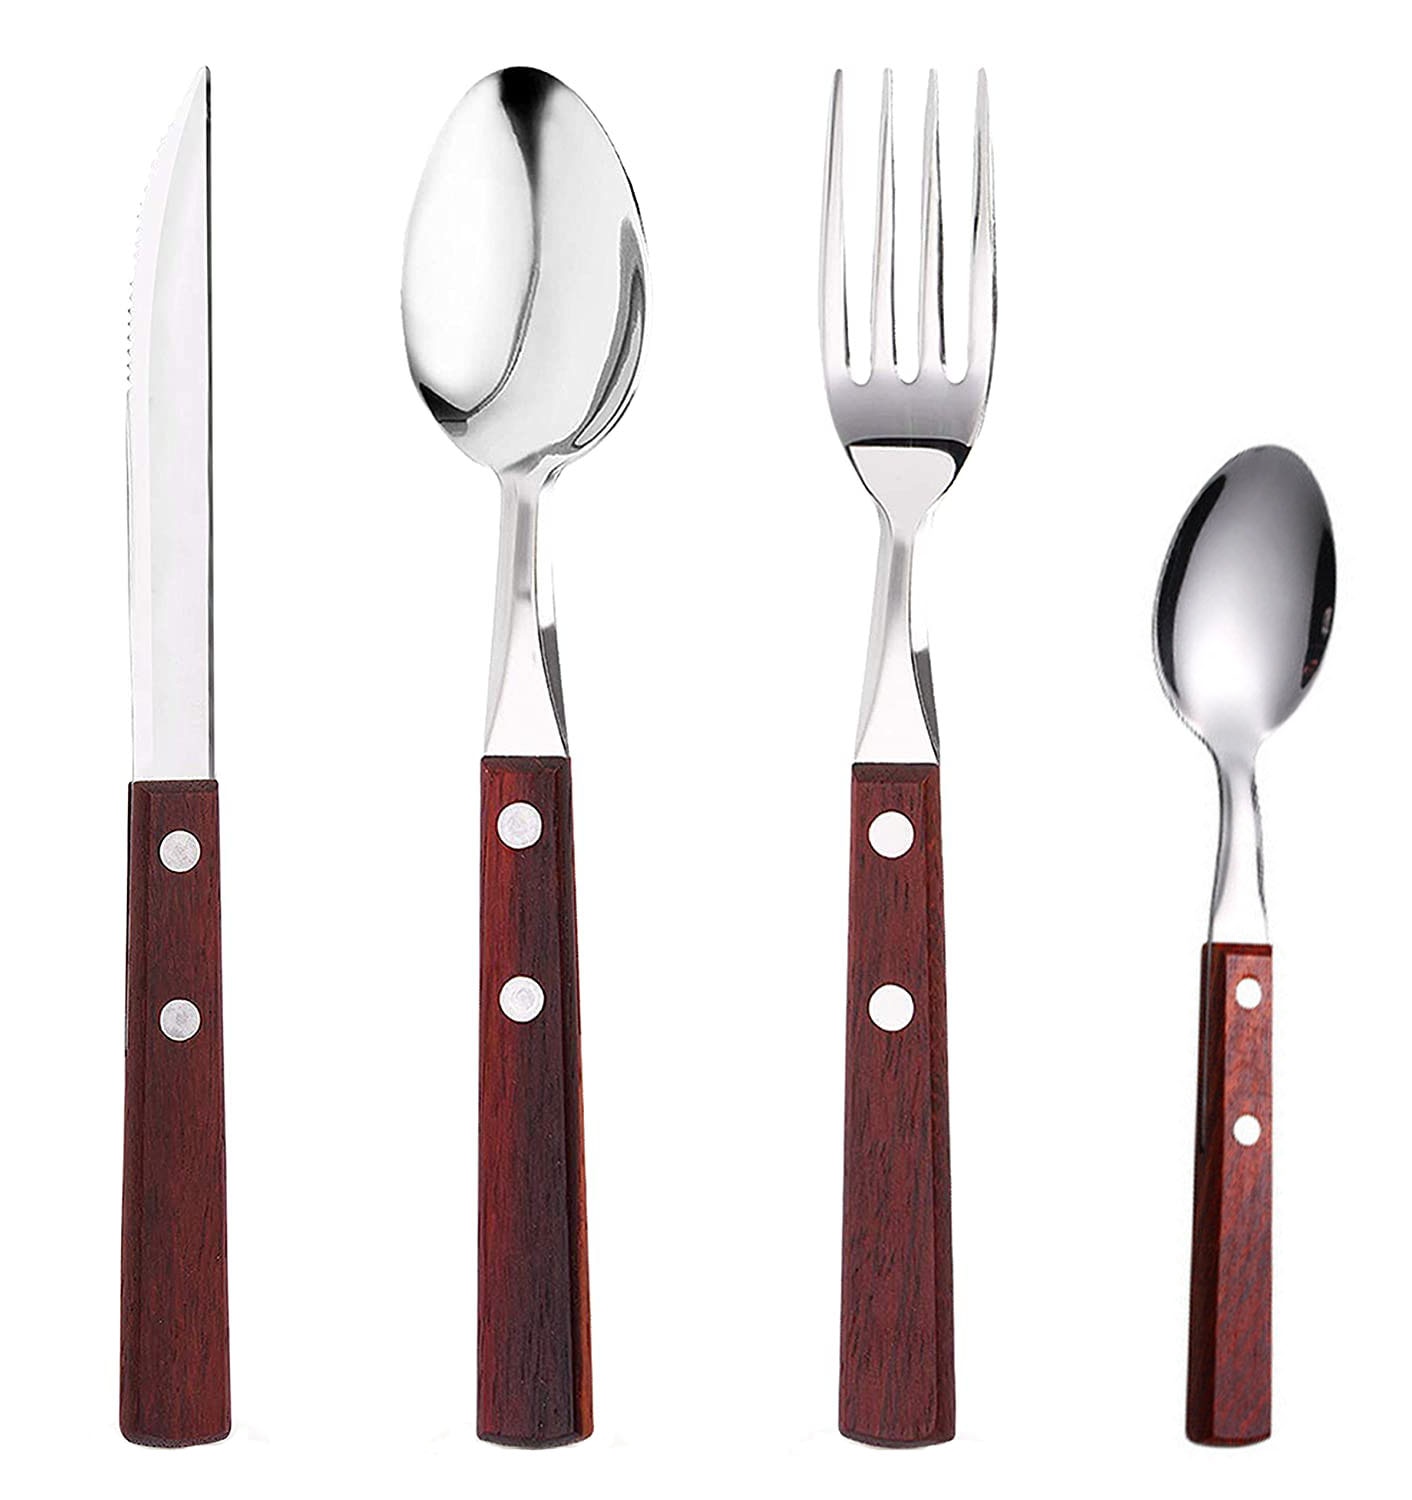 Wood Cutlery Set Including Fork Spoon Knife Set,Stainless Steel Tableware Dinnerware Set with Wooden Handle